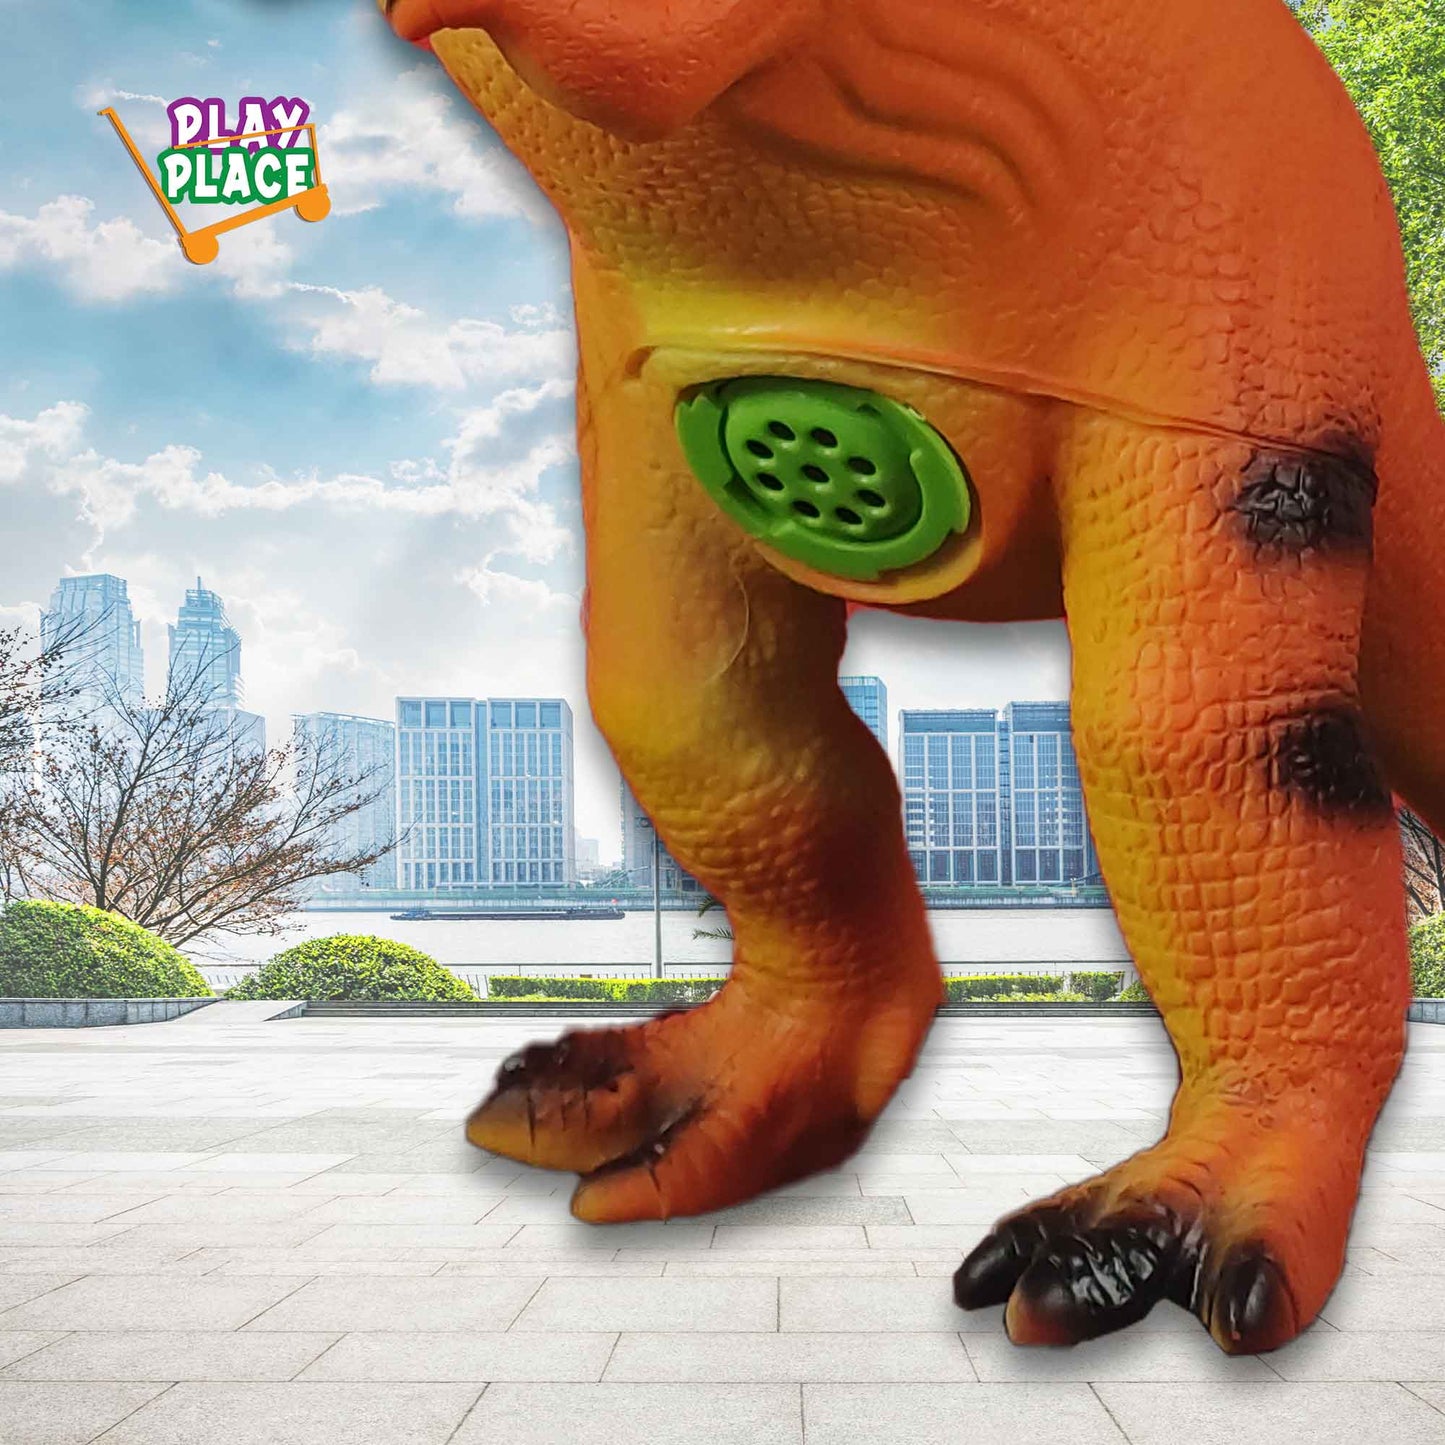 T-Rex Tyrannosaurus Dinosaur Rubber toy with Sound - Large Orange